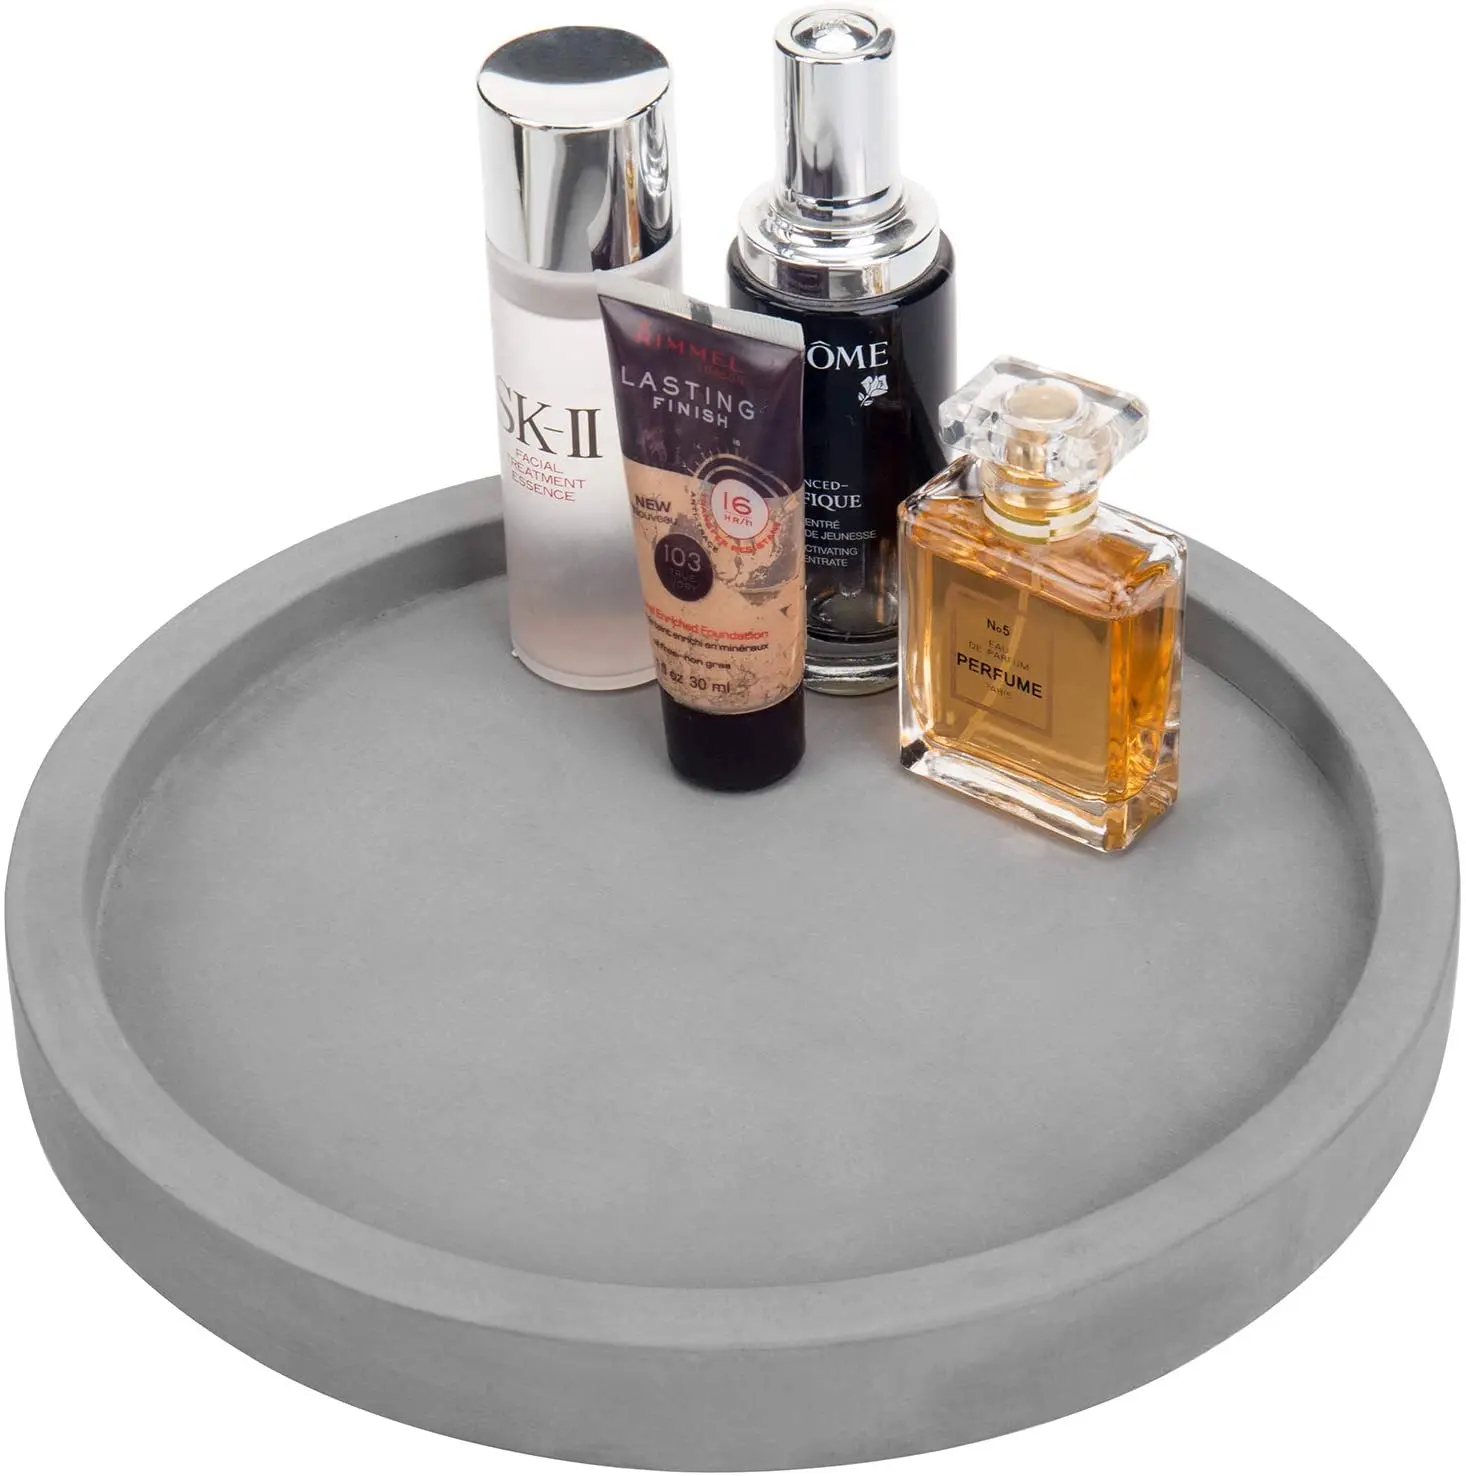 

Classic Cement Serving Tray Gray Round Concrete Dishes Decorative Bathroom Holder Vanity Trays Jewelry Dish Cosmetics Organizer